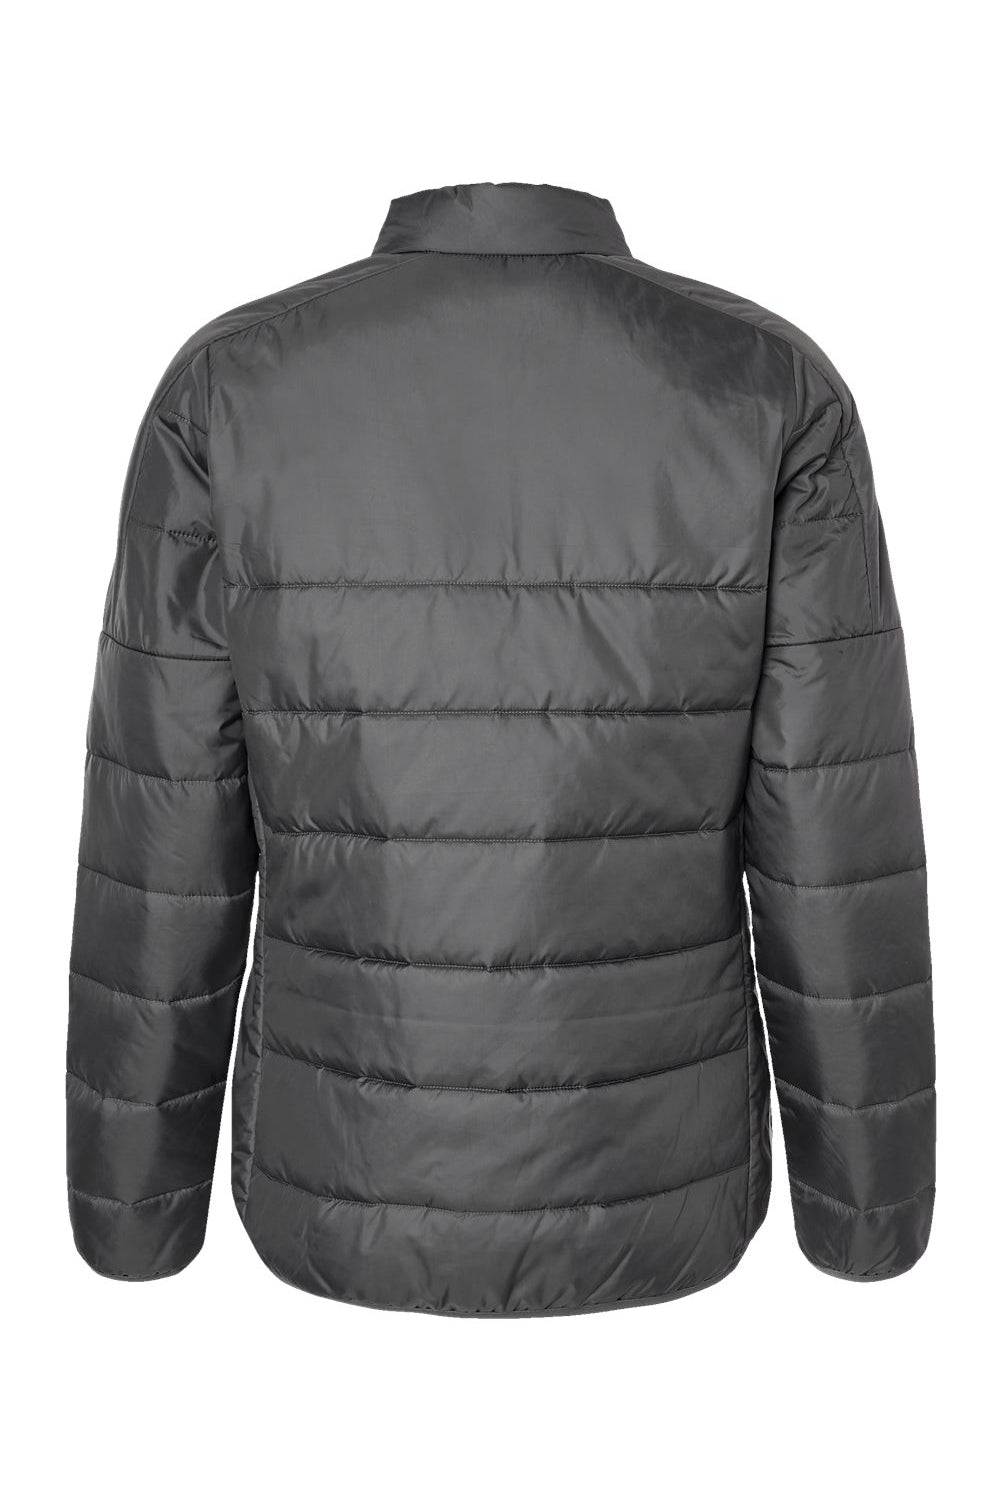 Adidas A571 Womens Full Zip Puffer Jacket Grey Flat Back